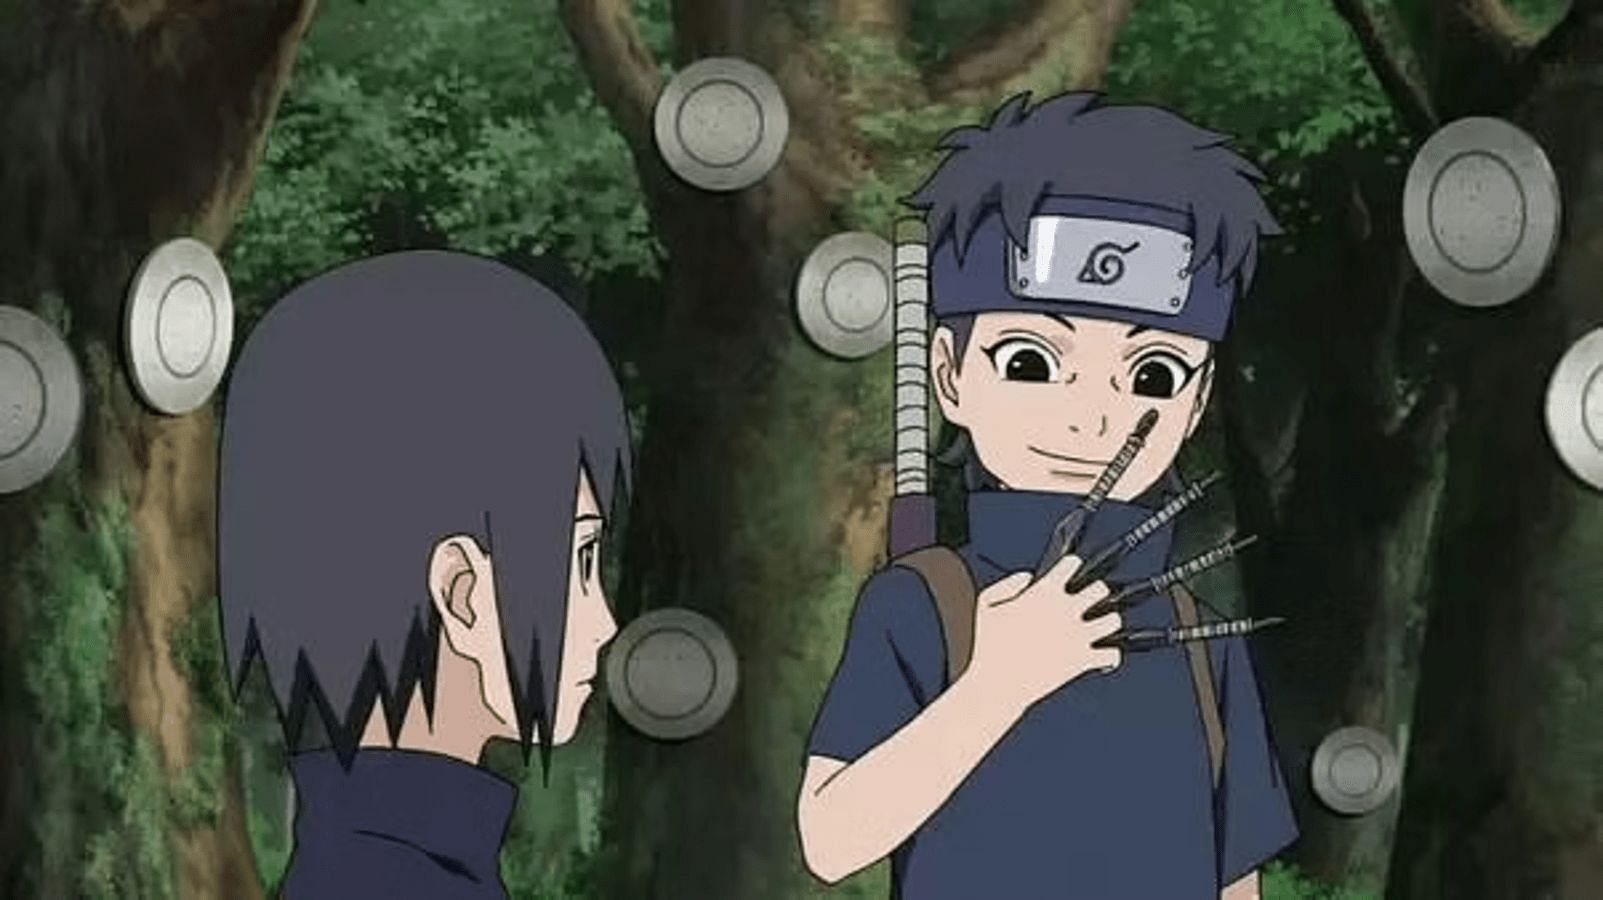 Shisui and Itachi as seen in the Naruto anime (image via Pierrot)